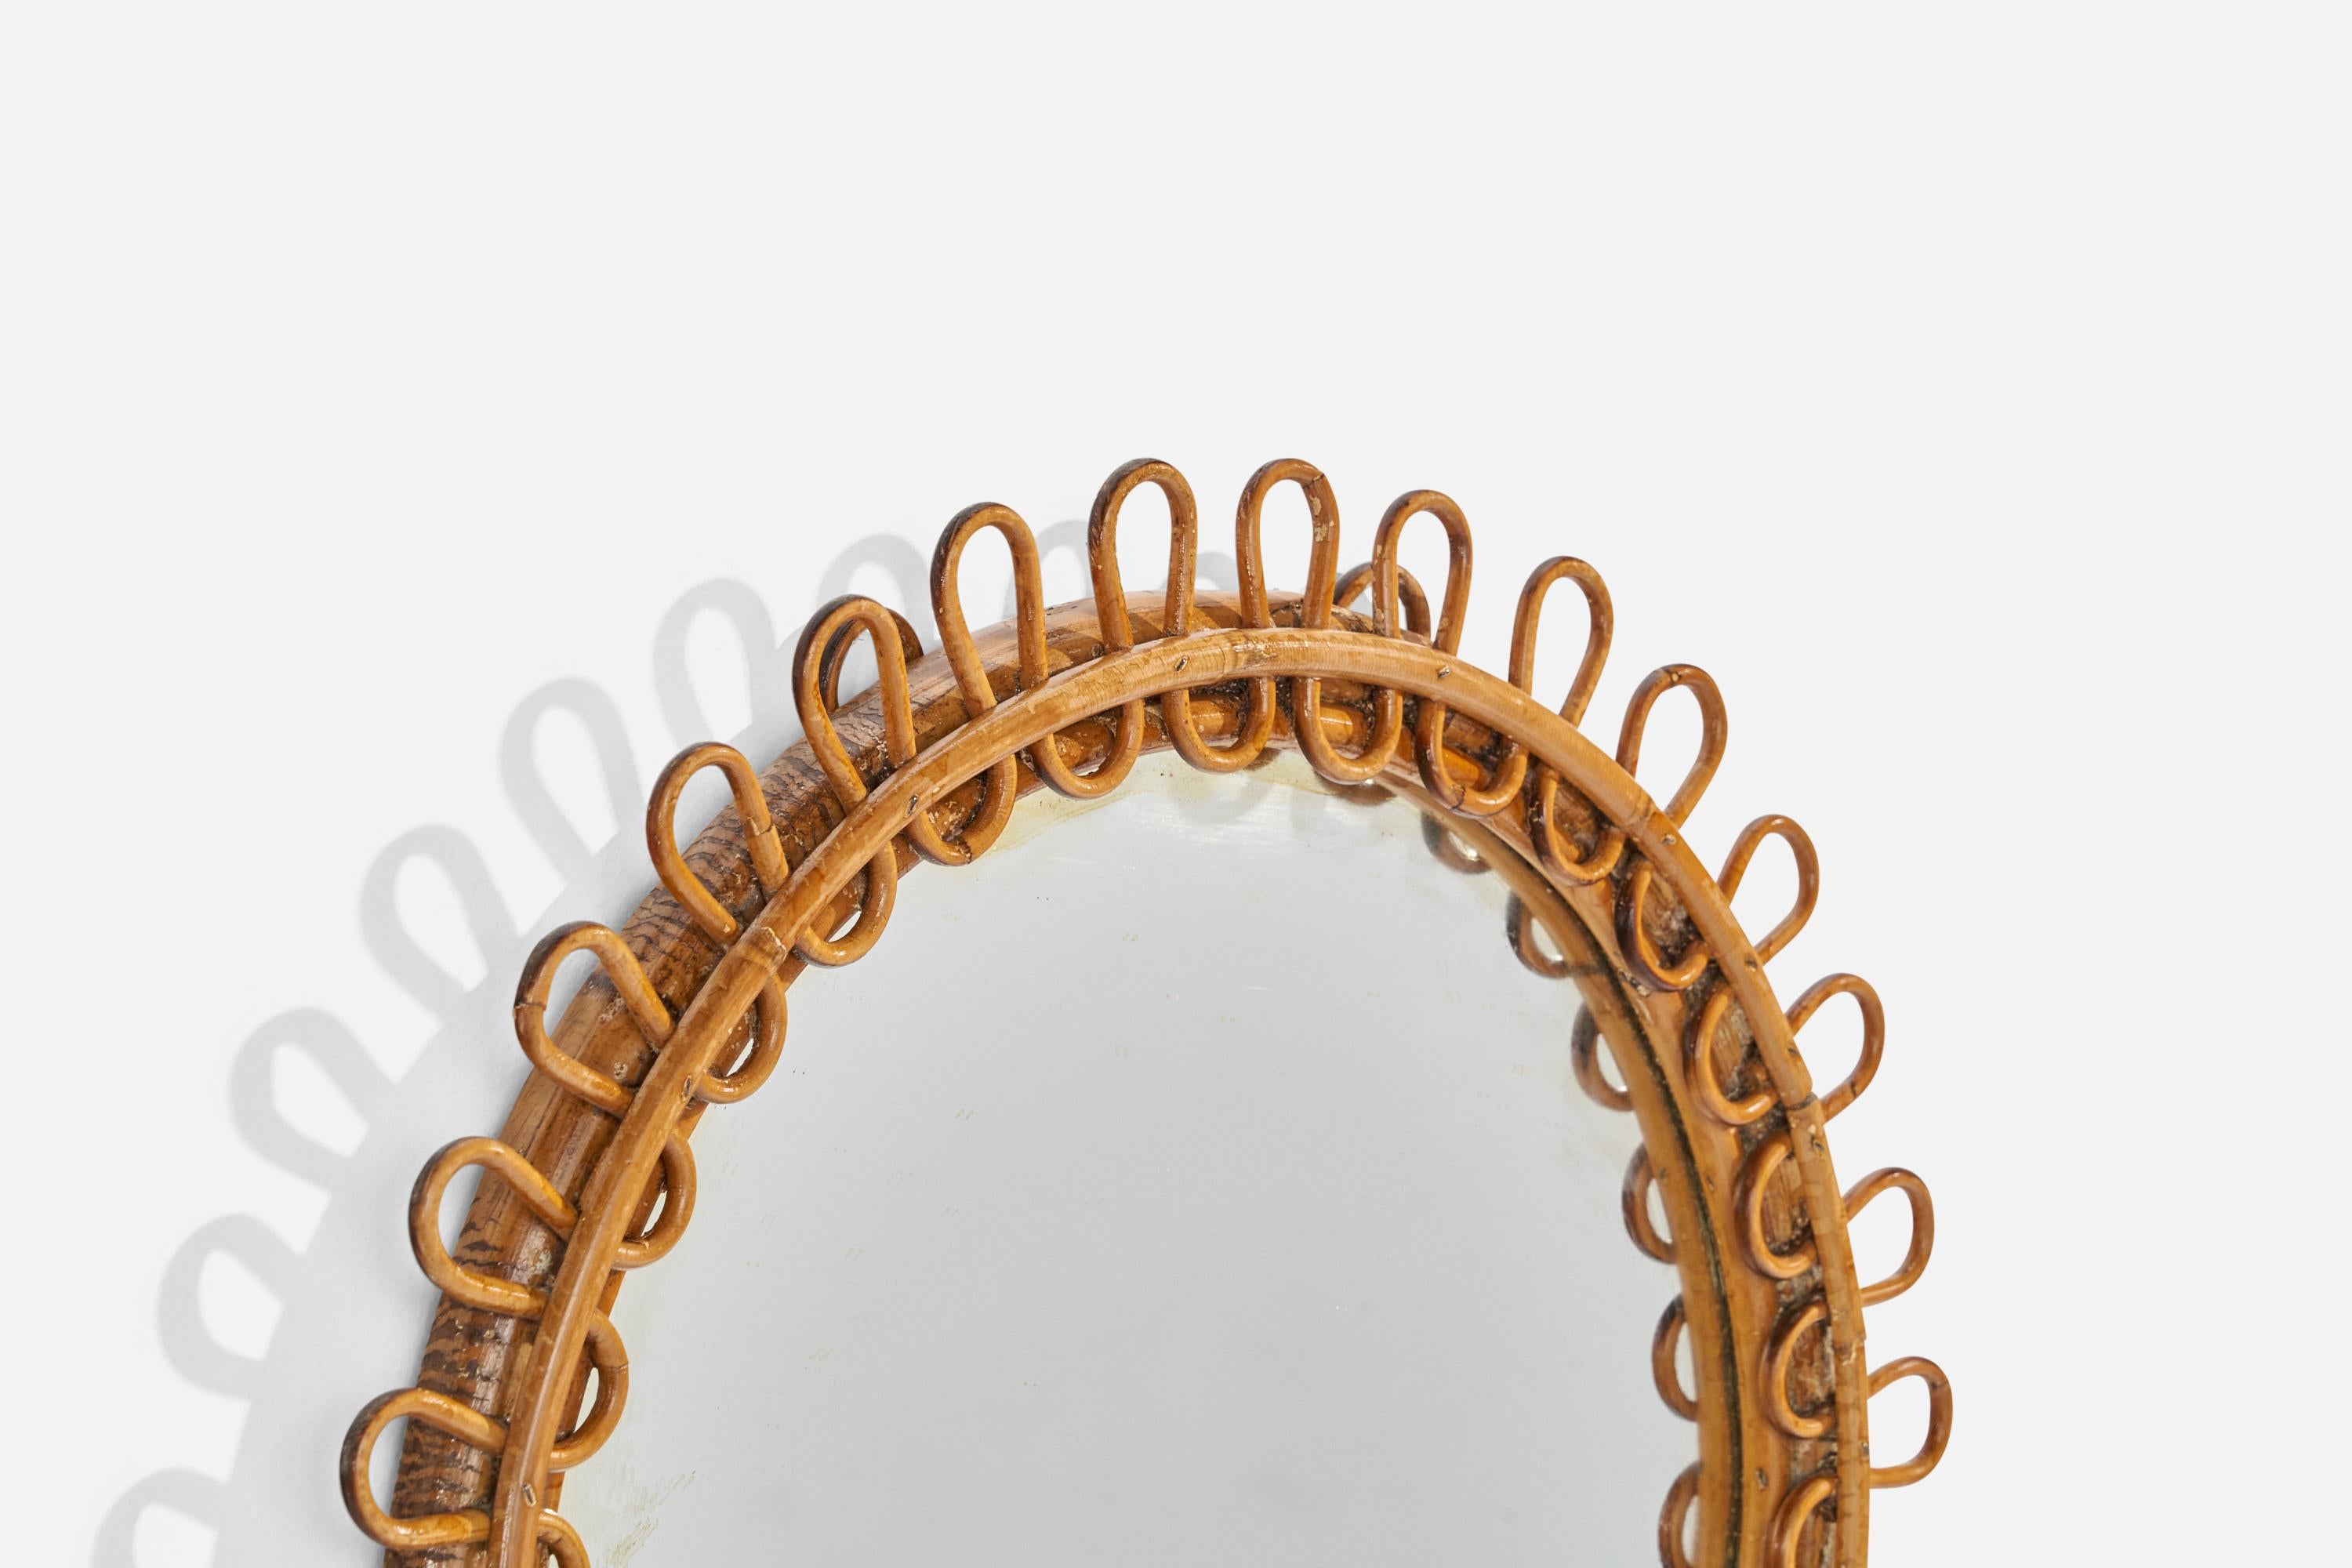 Mid-20th Century Italian Designer, Circular Wall Mirror, Rattan, Mirror Glass, Italy, C. 1950s For Sale